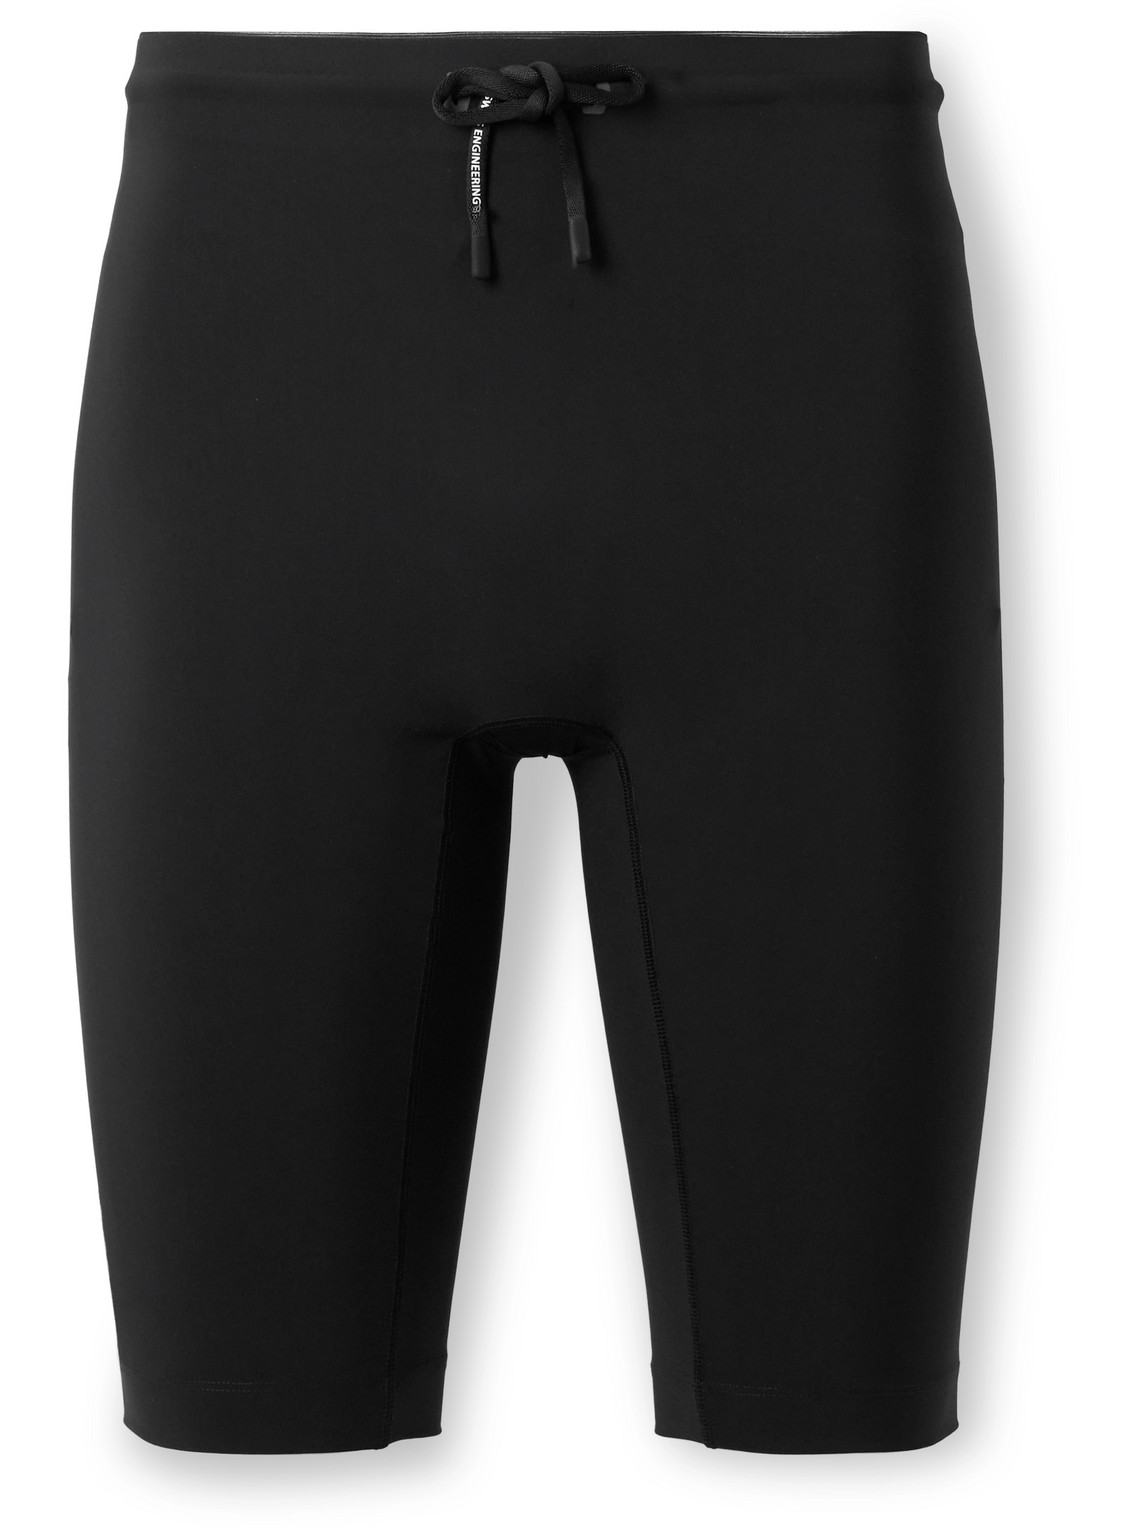 ON - Skinny-Fit Logo-Print Stretch-Jersey Running Shorts - Men - Black - XL von ON